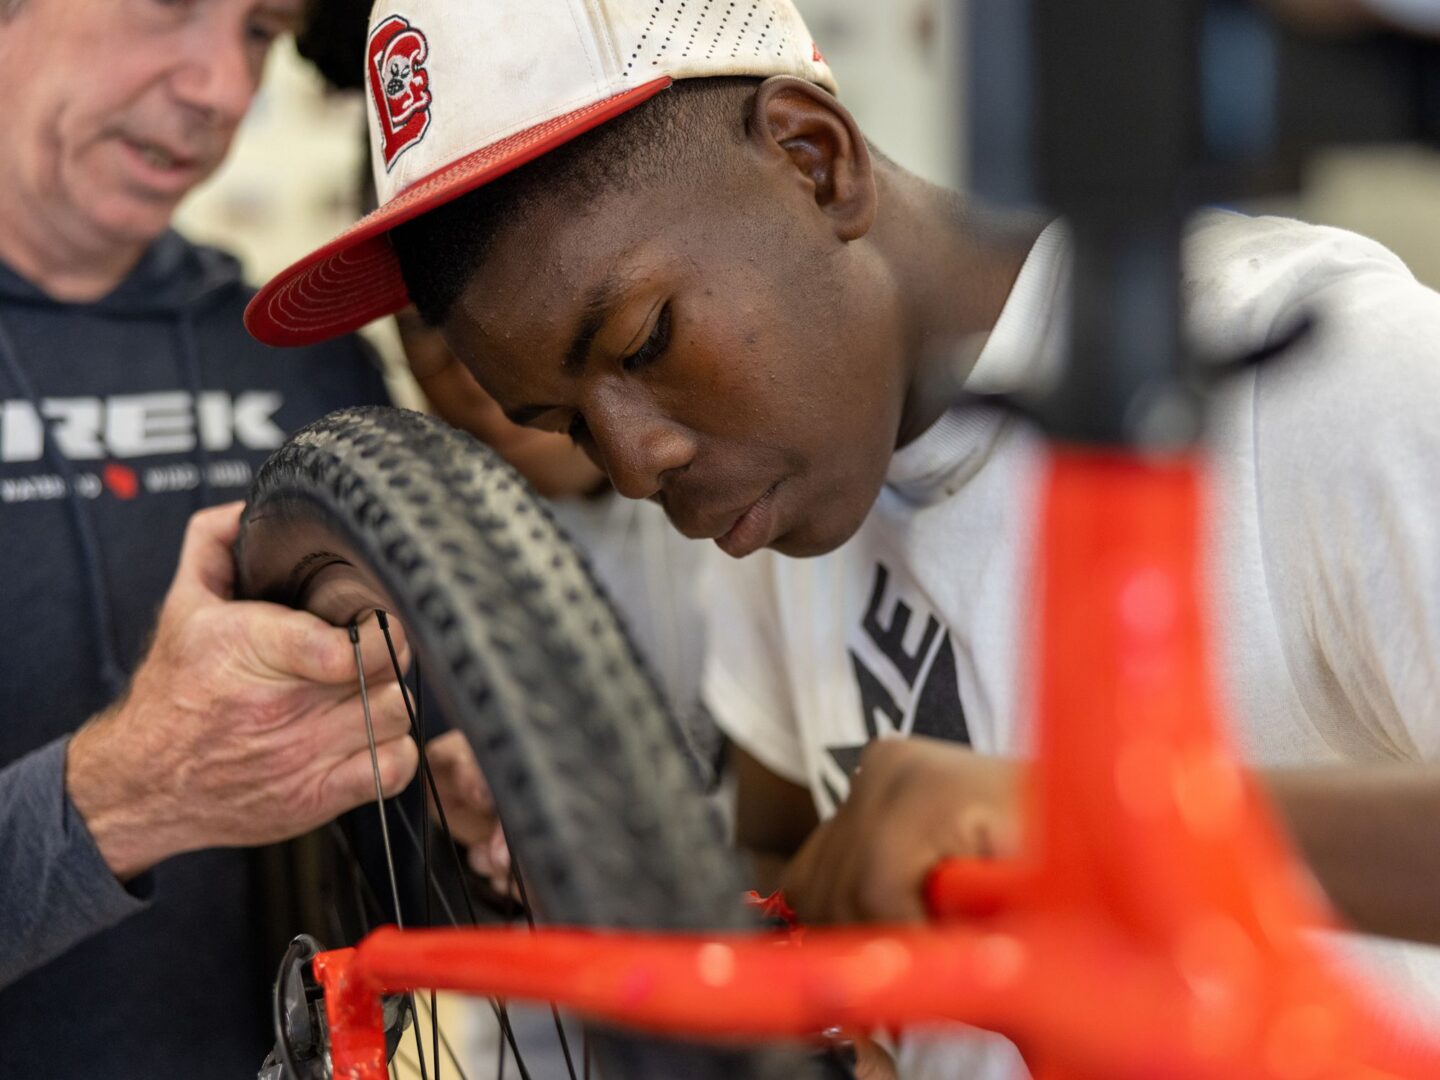 A boy fixing something on a rear bike wheel with the help of a man in a Trek sweatshirt.